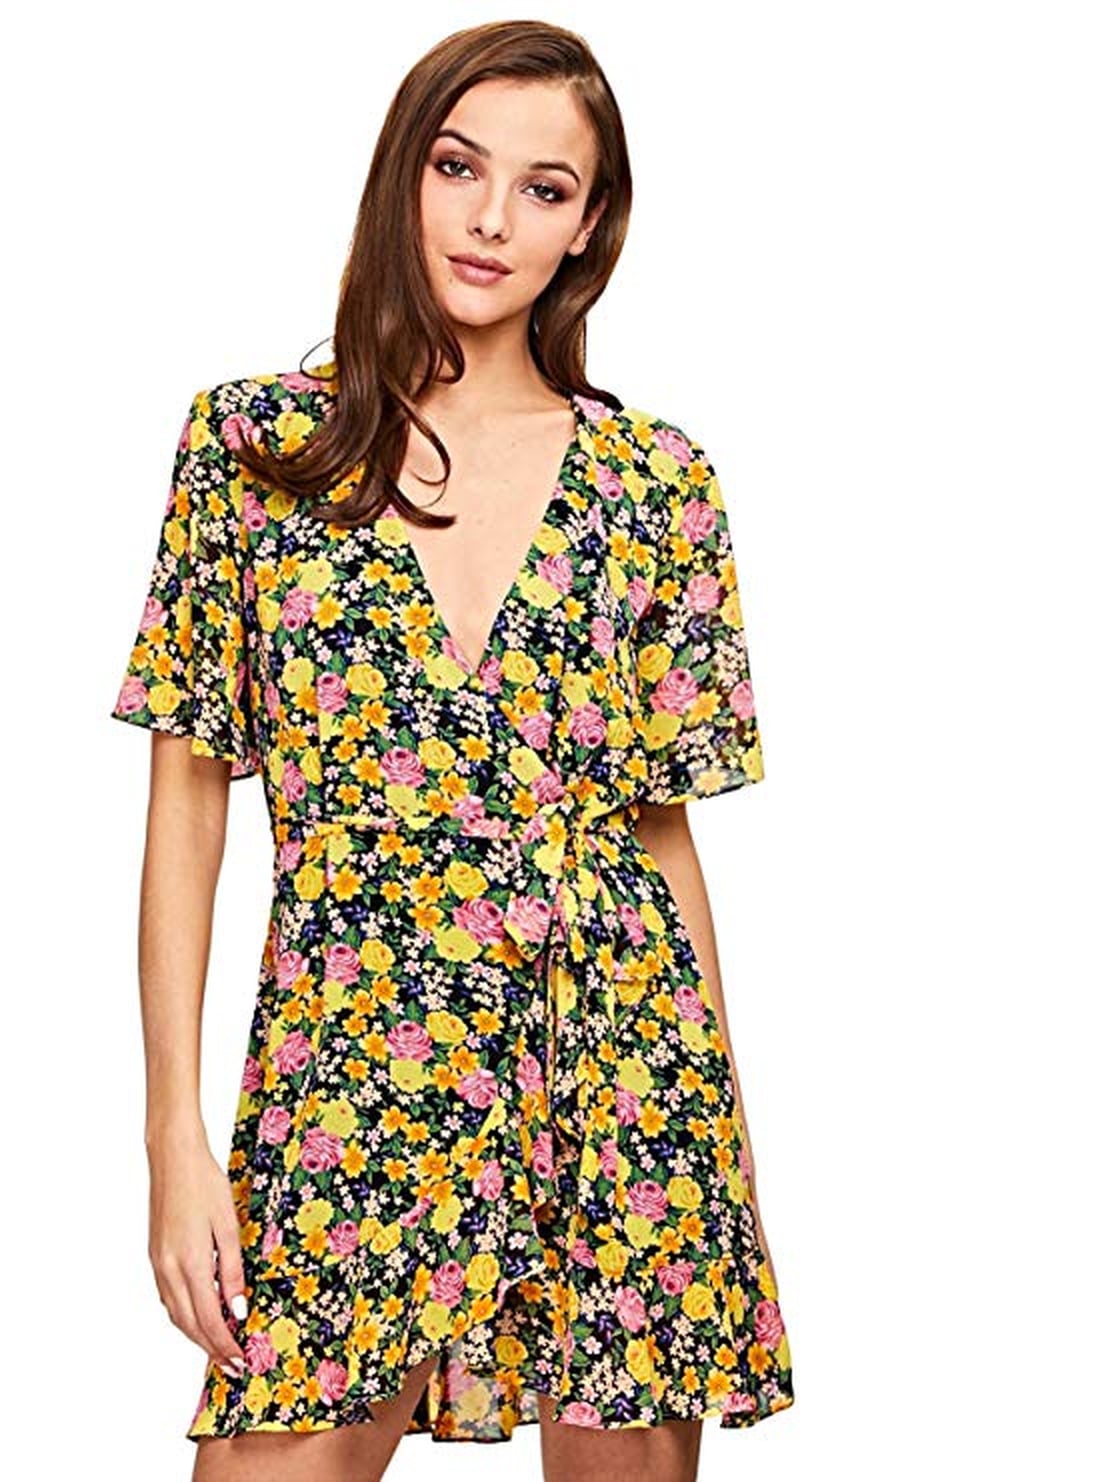 Best Cheap Amazon Clothes For Women Spring 2020 | POPSUGAR Fashion